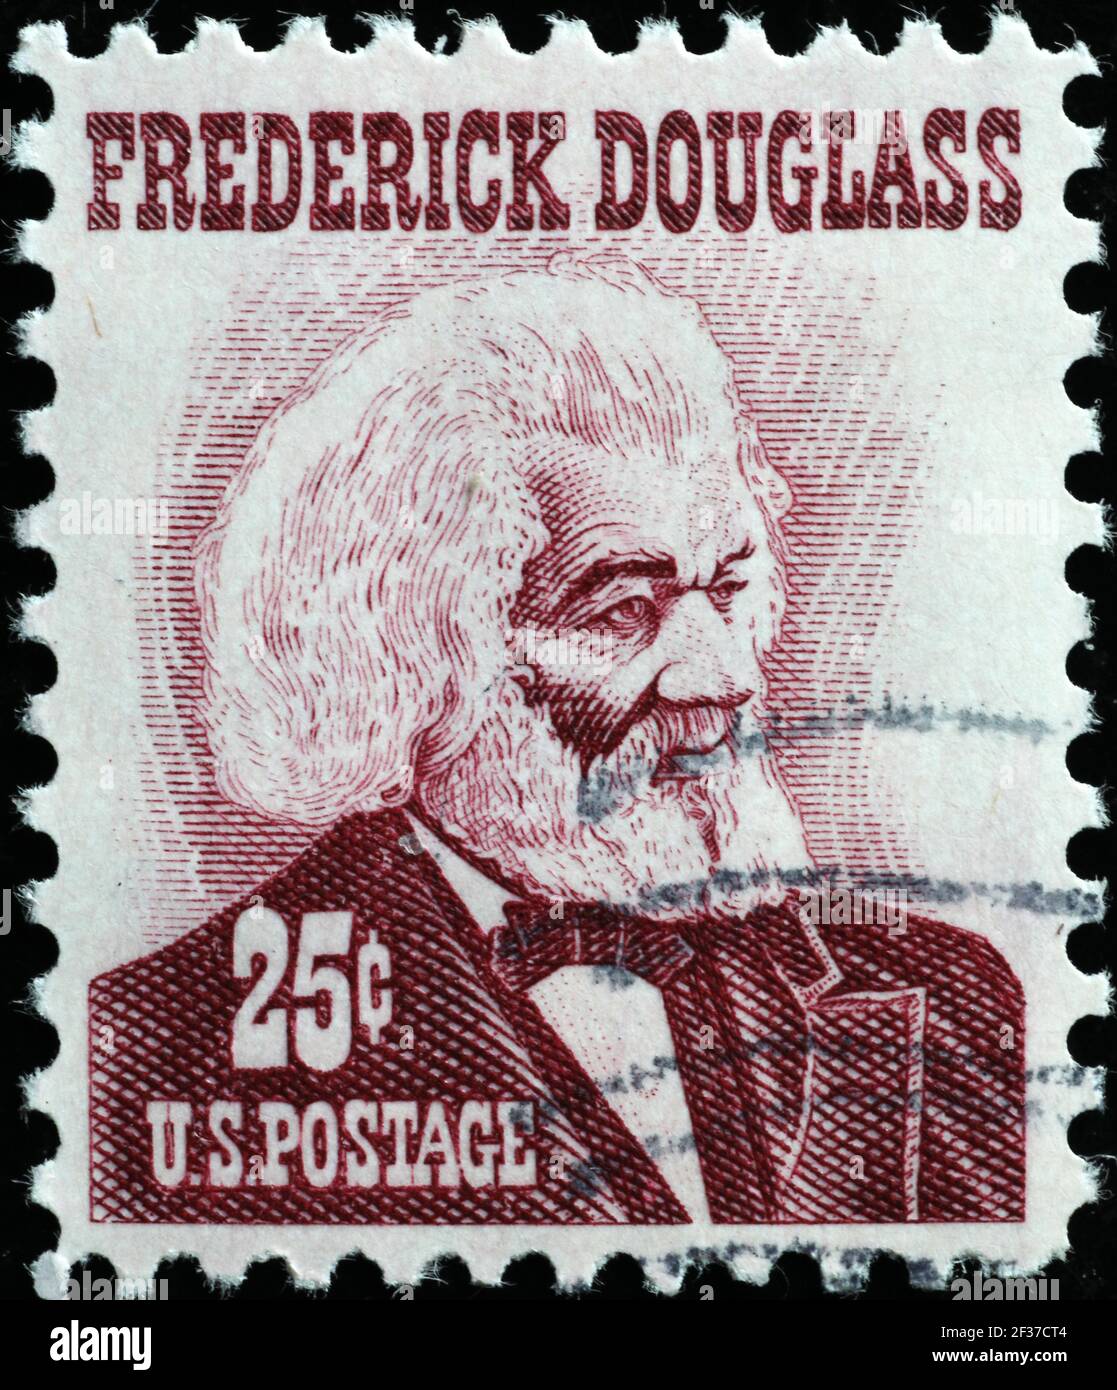 Abolitionist Frederick Douglass on vintage american stamp Stock Photo